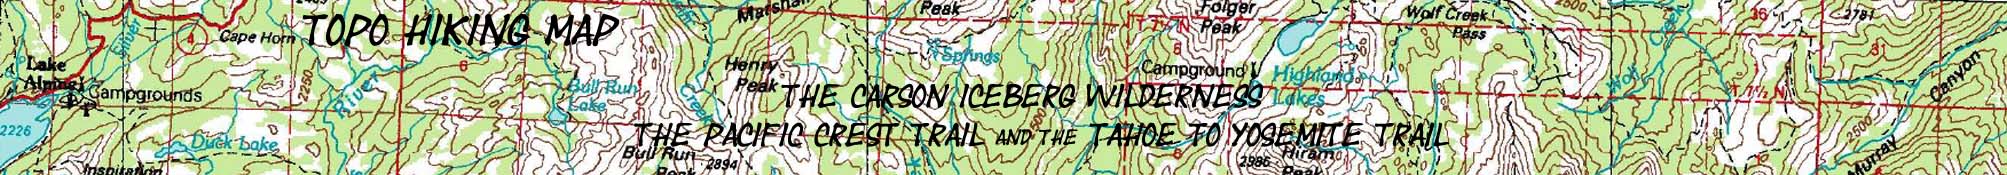 Carson-Iceberg Wilderness topo hiking map.